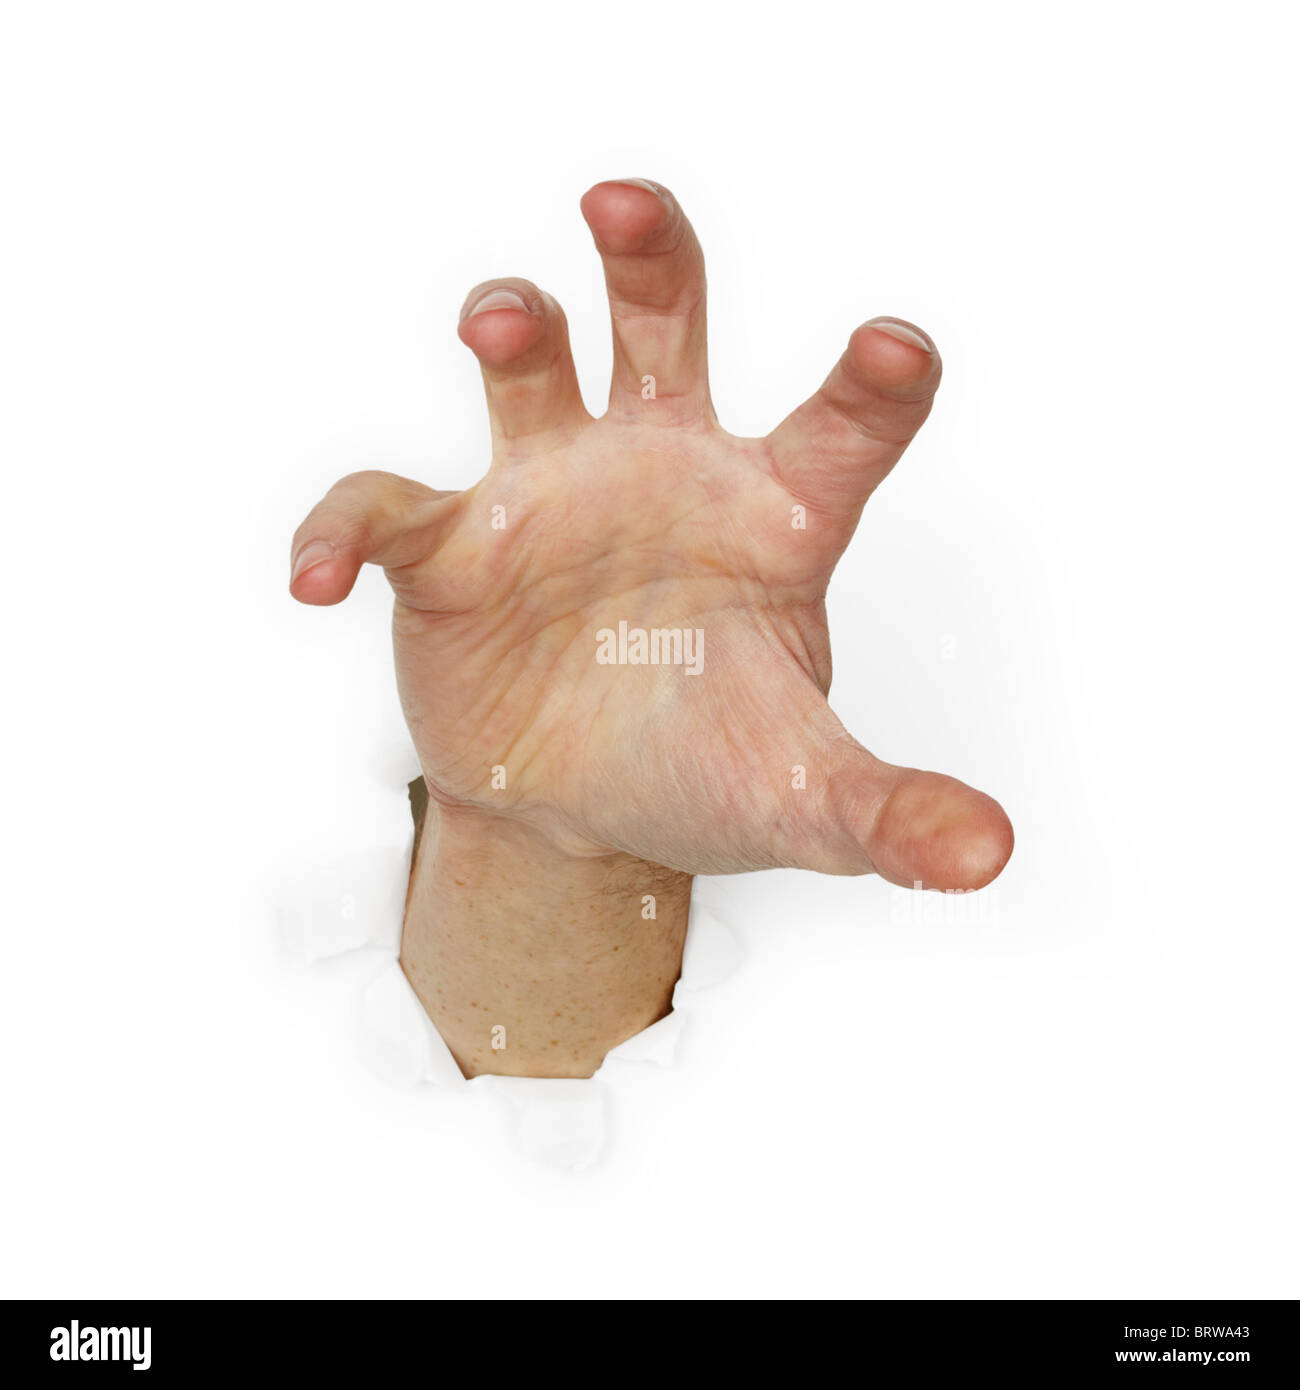 Greedy man's hand isolated on white background Stock Photo